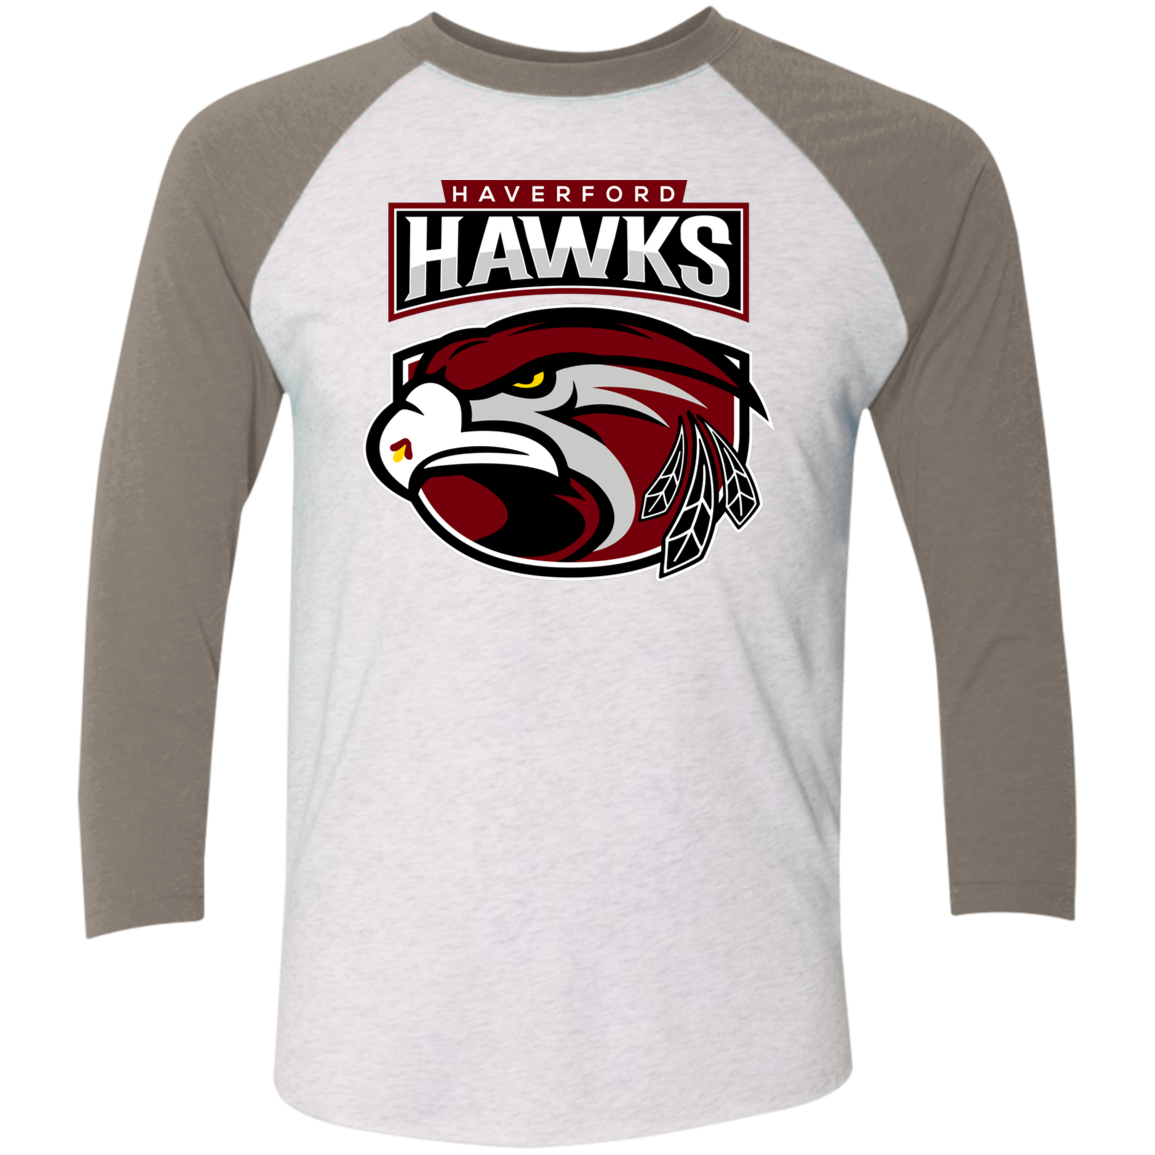 Hawks Tri-Blend 3/4 Sleeve Raglan T-Shirt